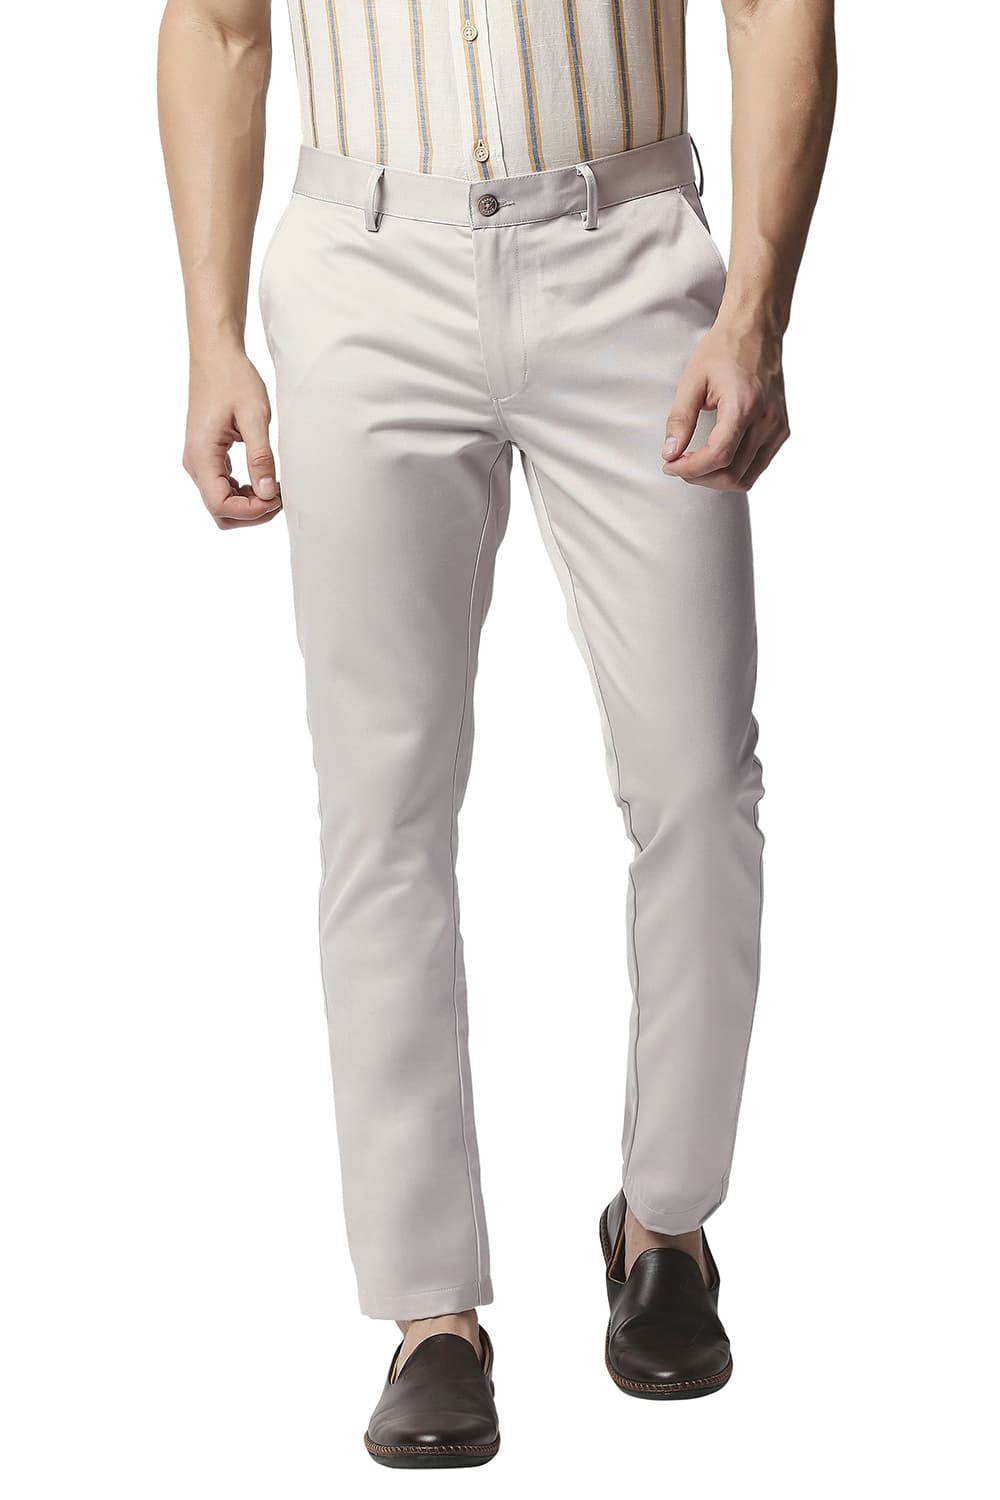 Basics | Basics Tapered Fit Light Grey Satin Trousers 0